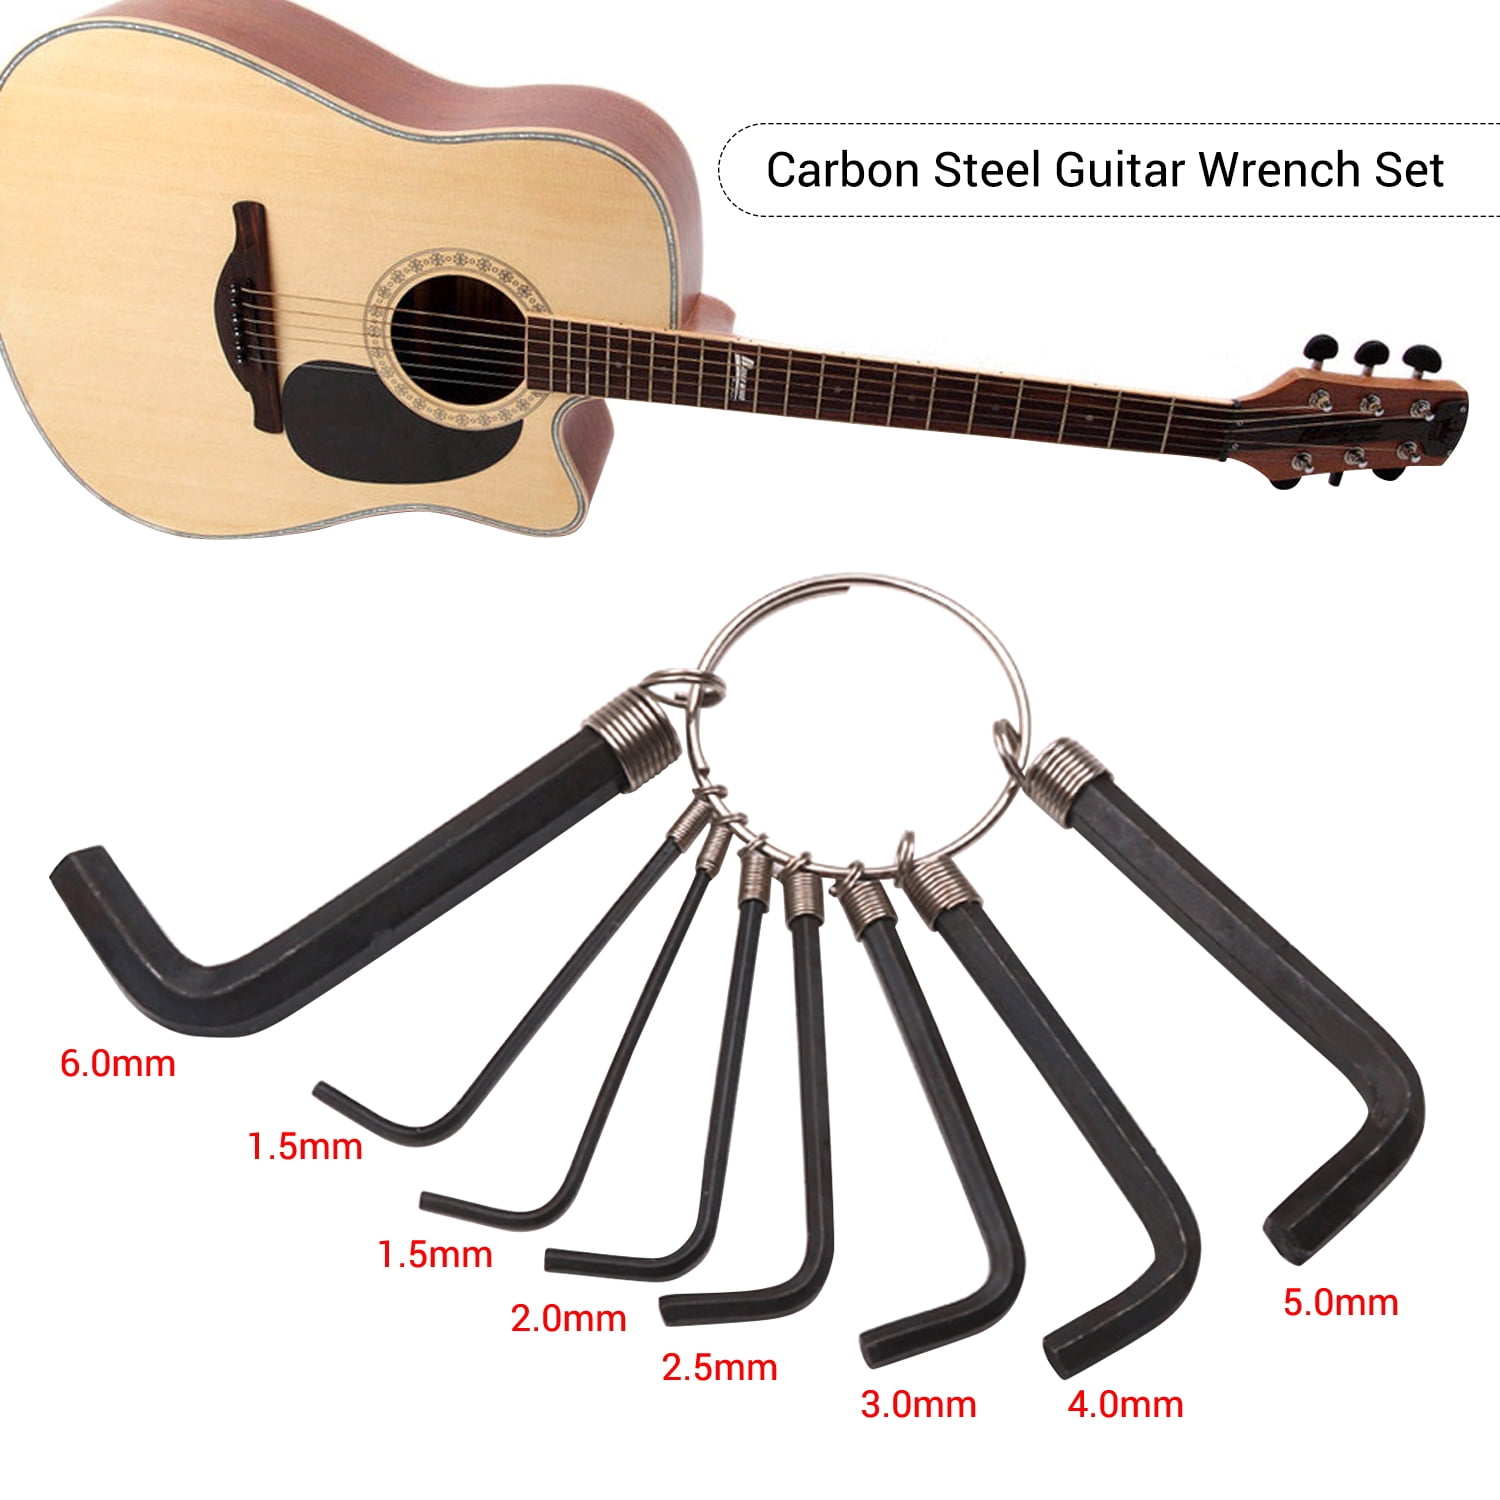 Bass And Ukulele For Guitar Guitar Allen Wrench Wear-resistant And Durable For Guitar Bass And Ukulele. 